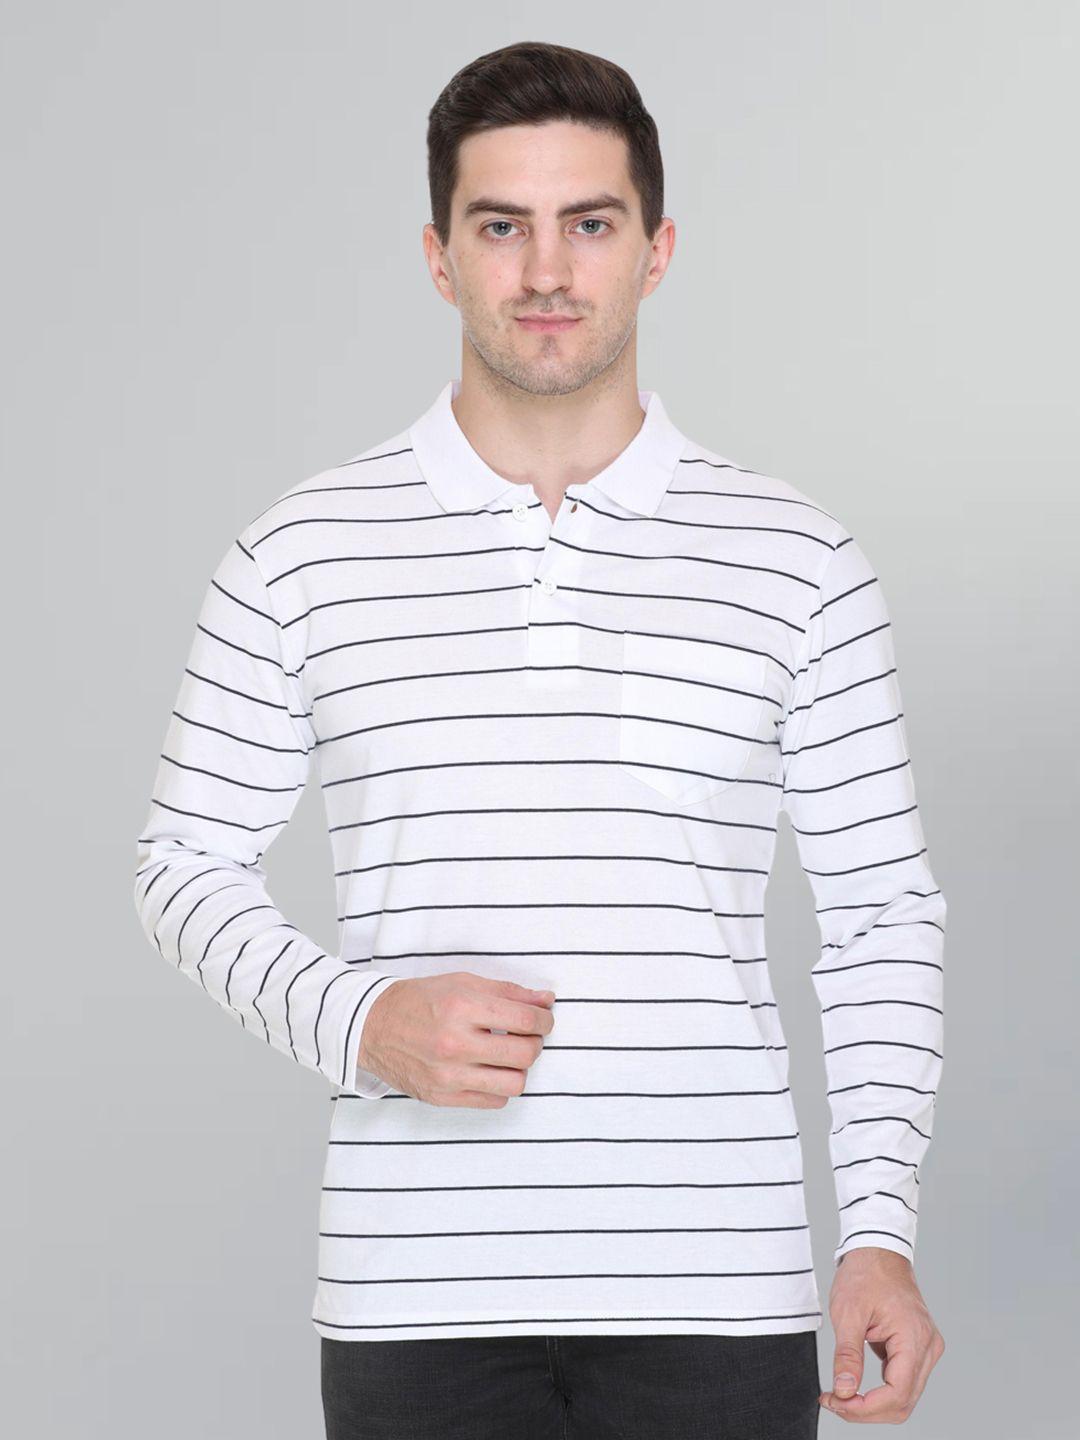 godfrey men striped polo collar monochrome t-shirt